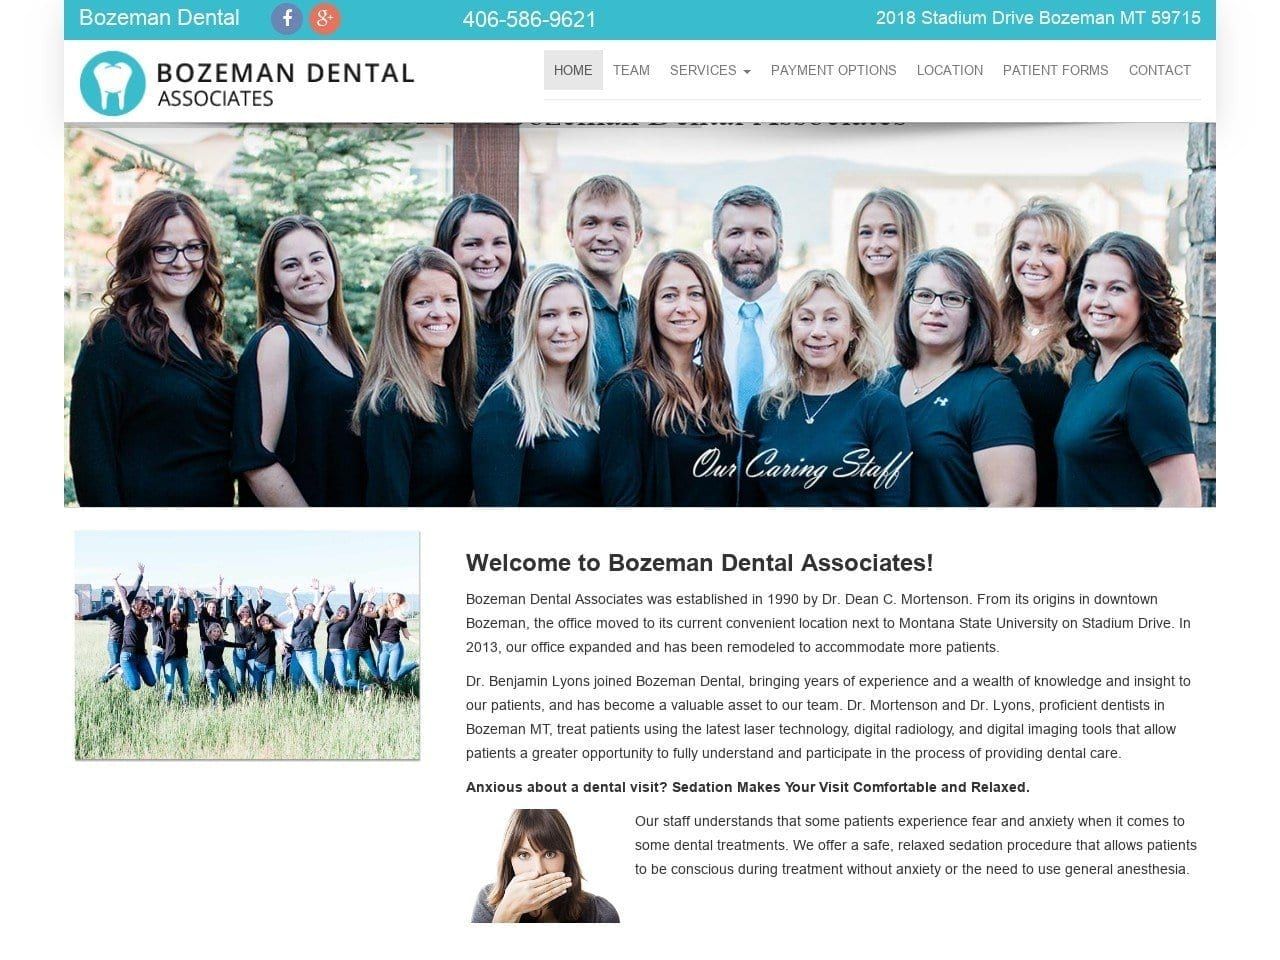 Bozeman Dental  Assoc Website Screenshot from bozemandentalassoc.com